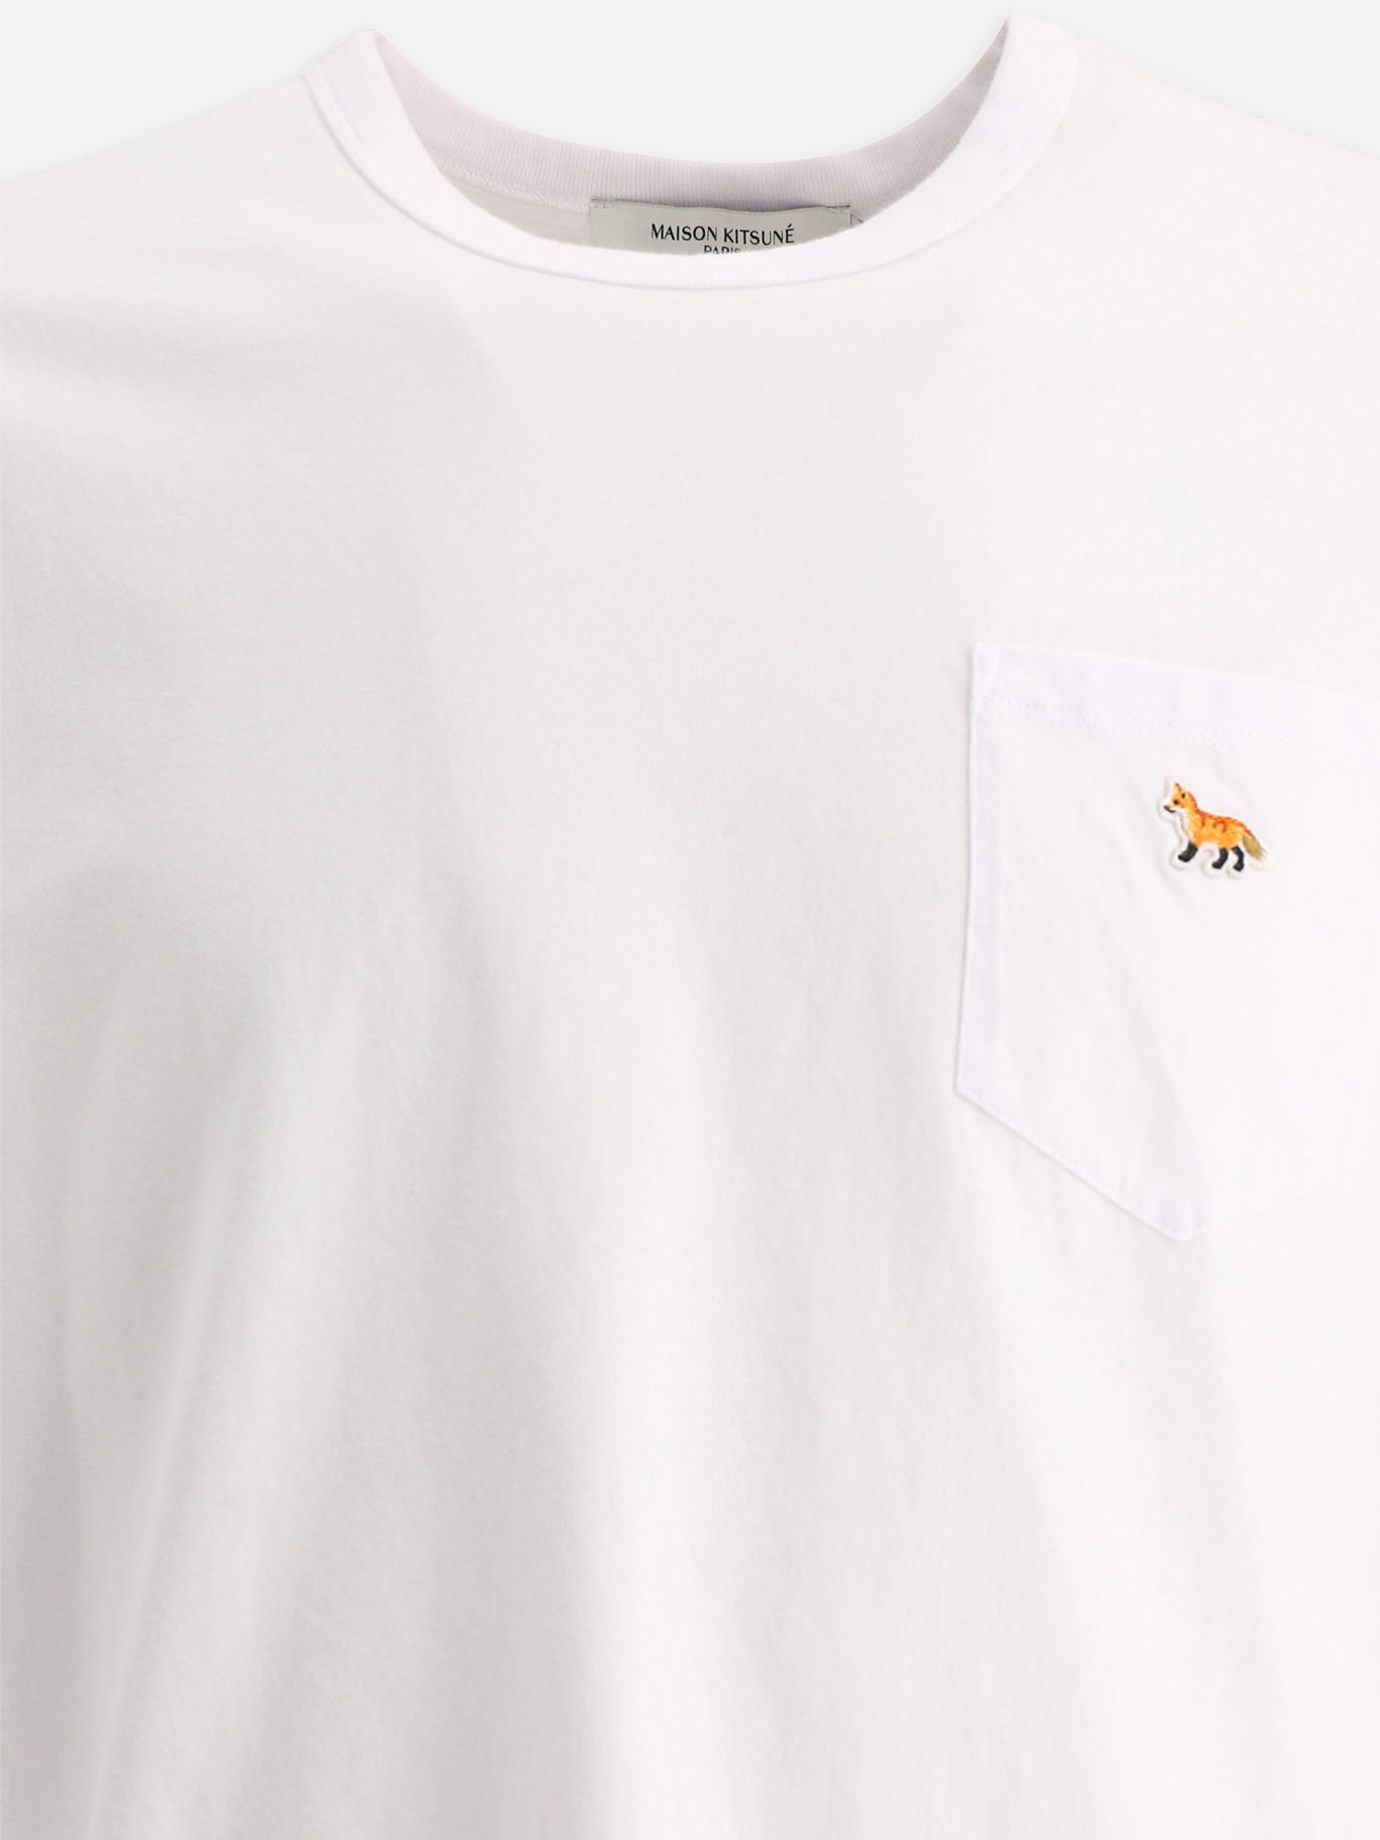 T-shirt  Profile Fox  by Maison Kitsuné